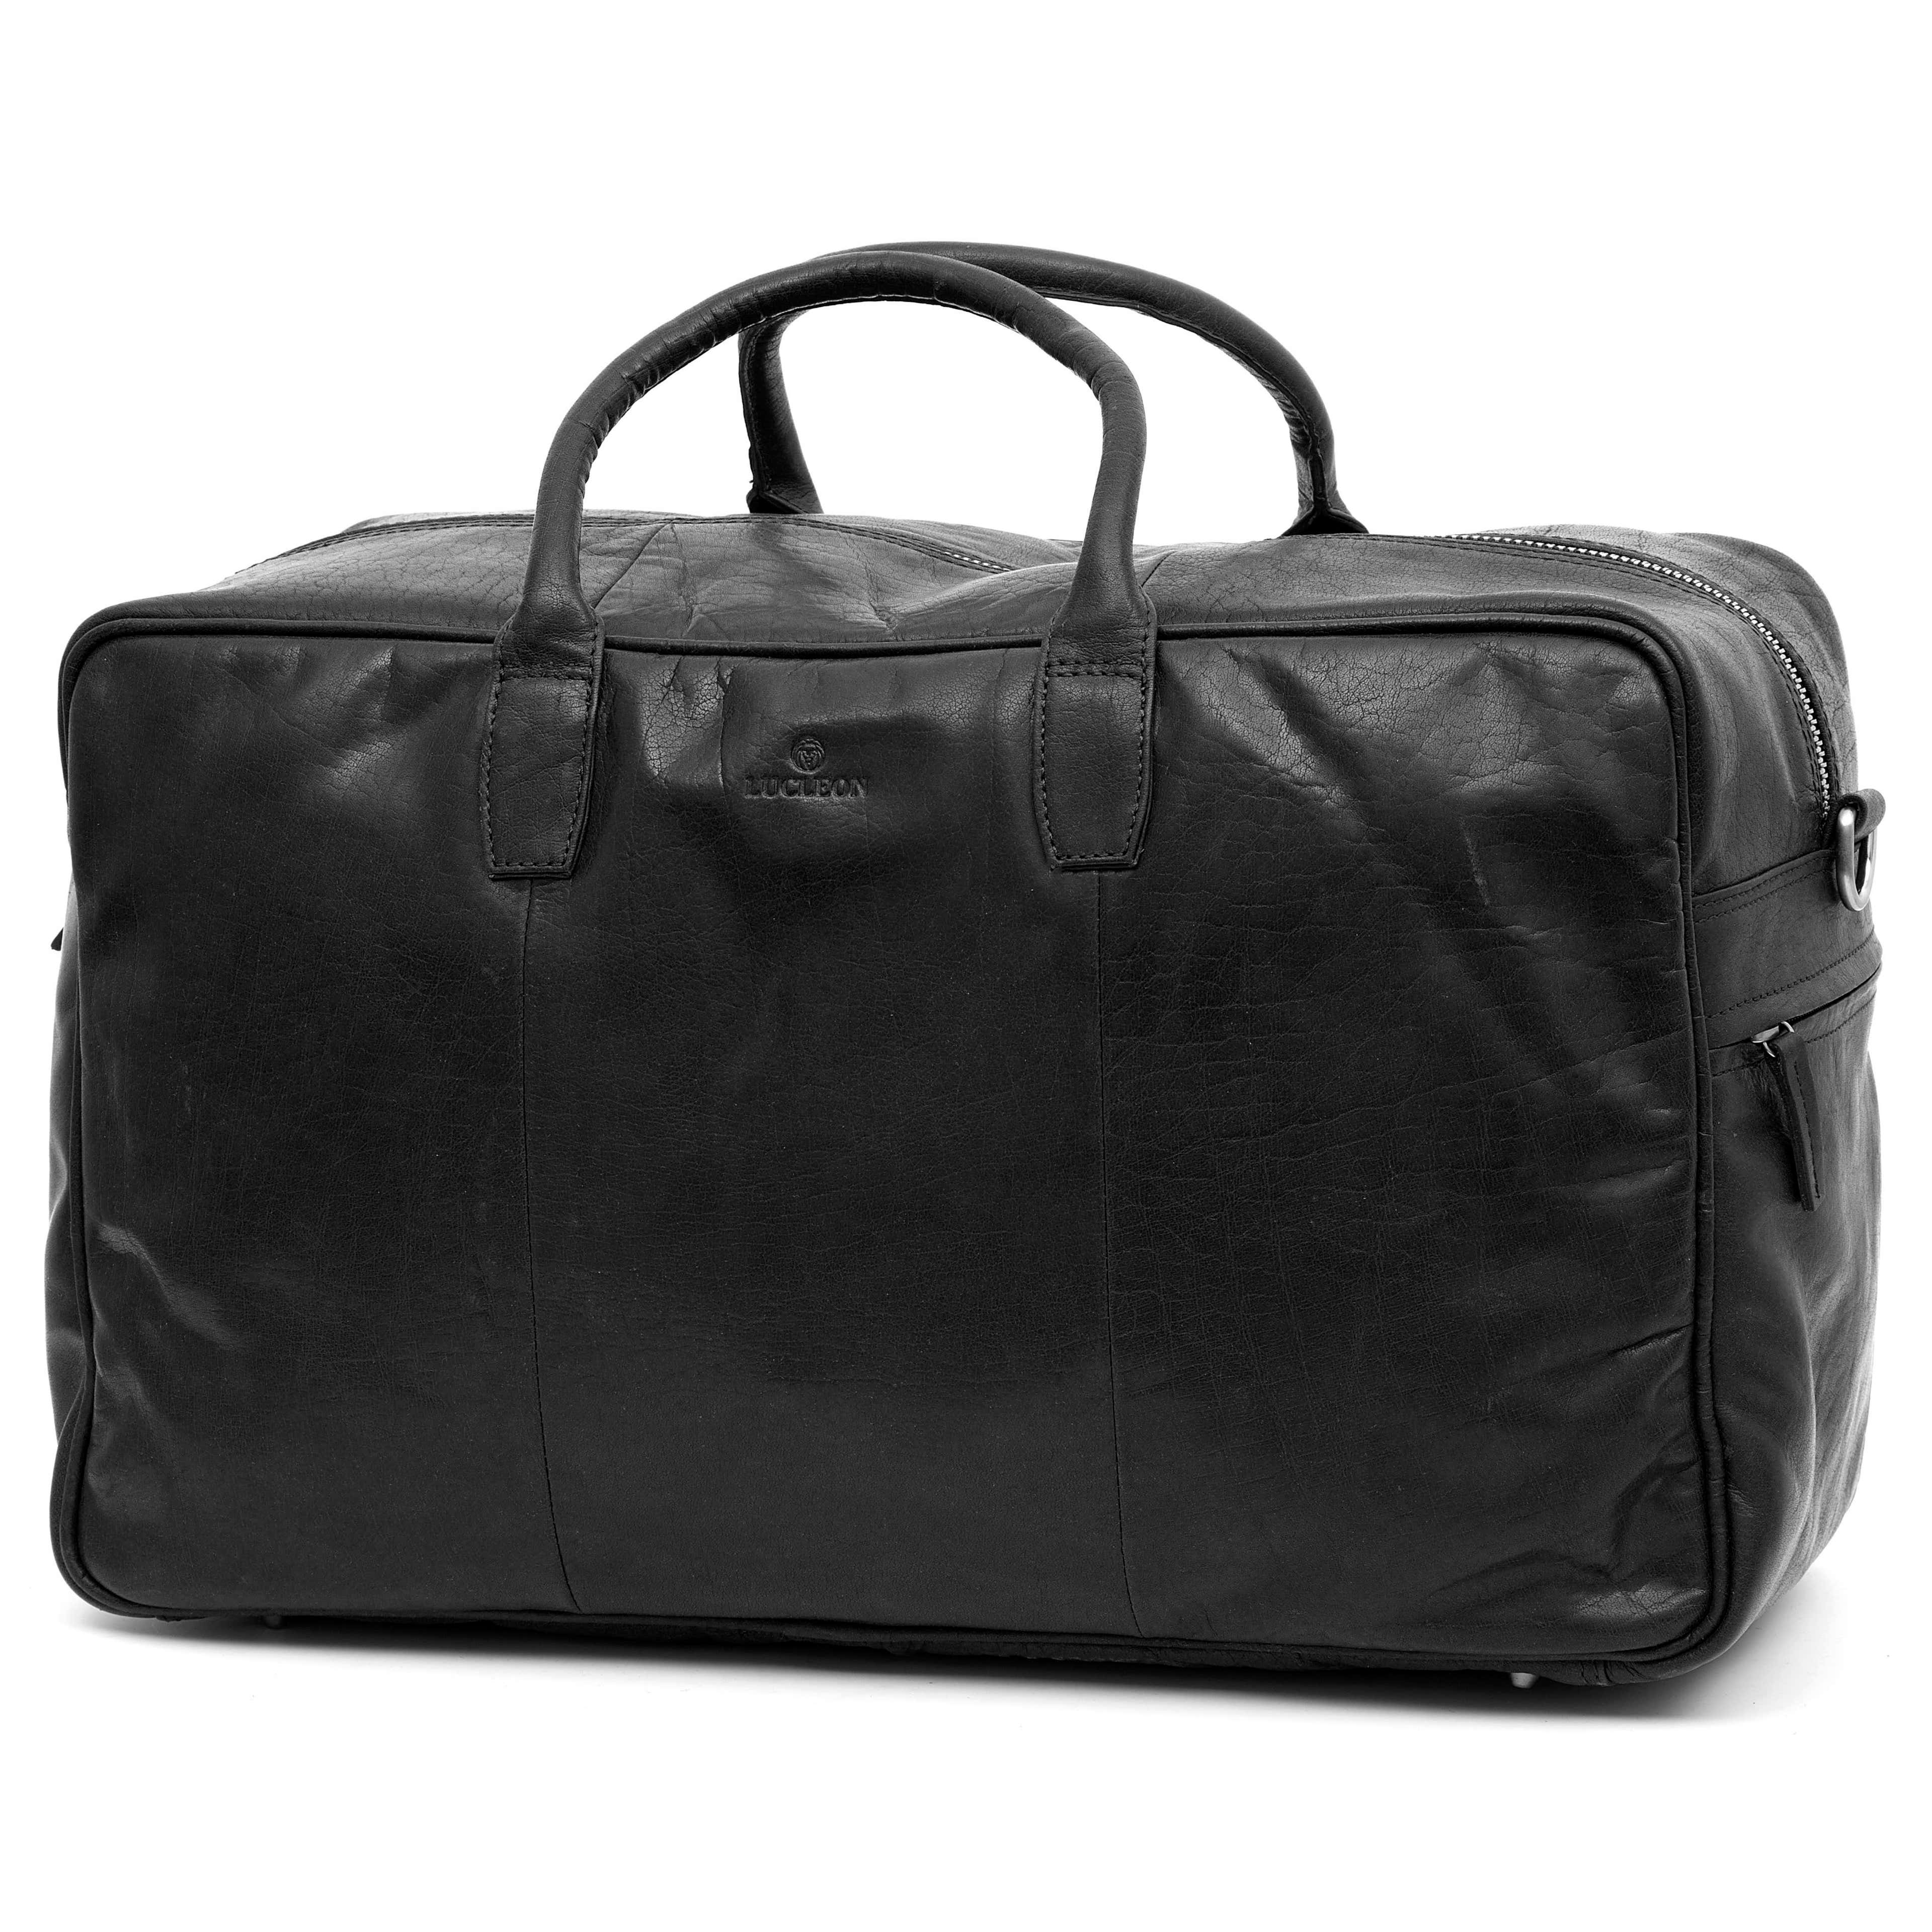 Montreal Black Leather Duffel Bag